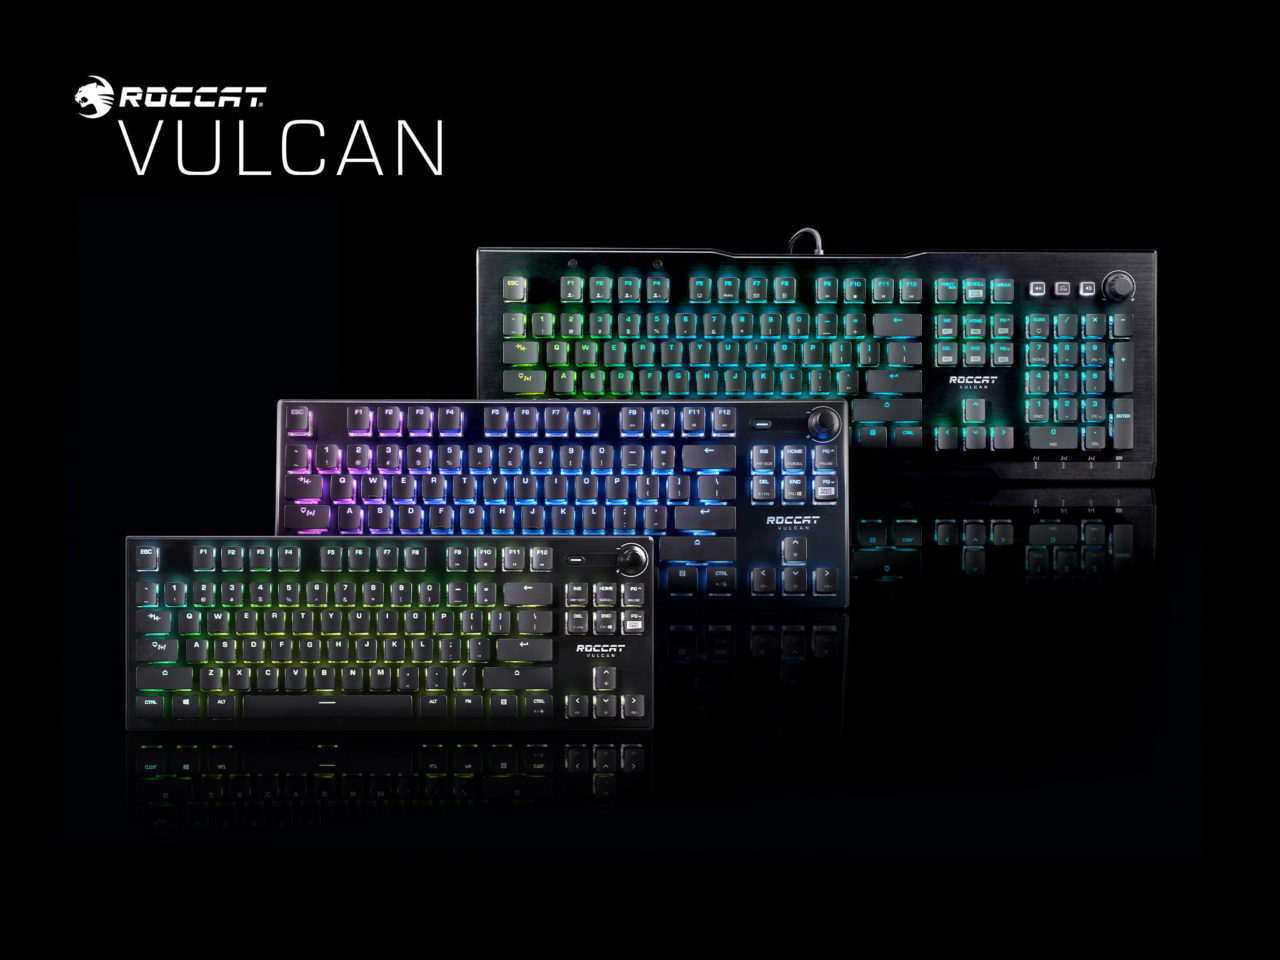 Vulcan keyboard product image (Roccat)